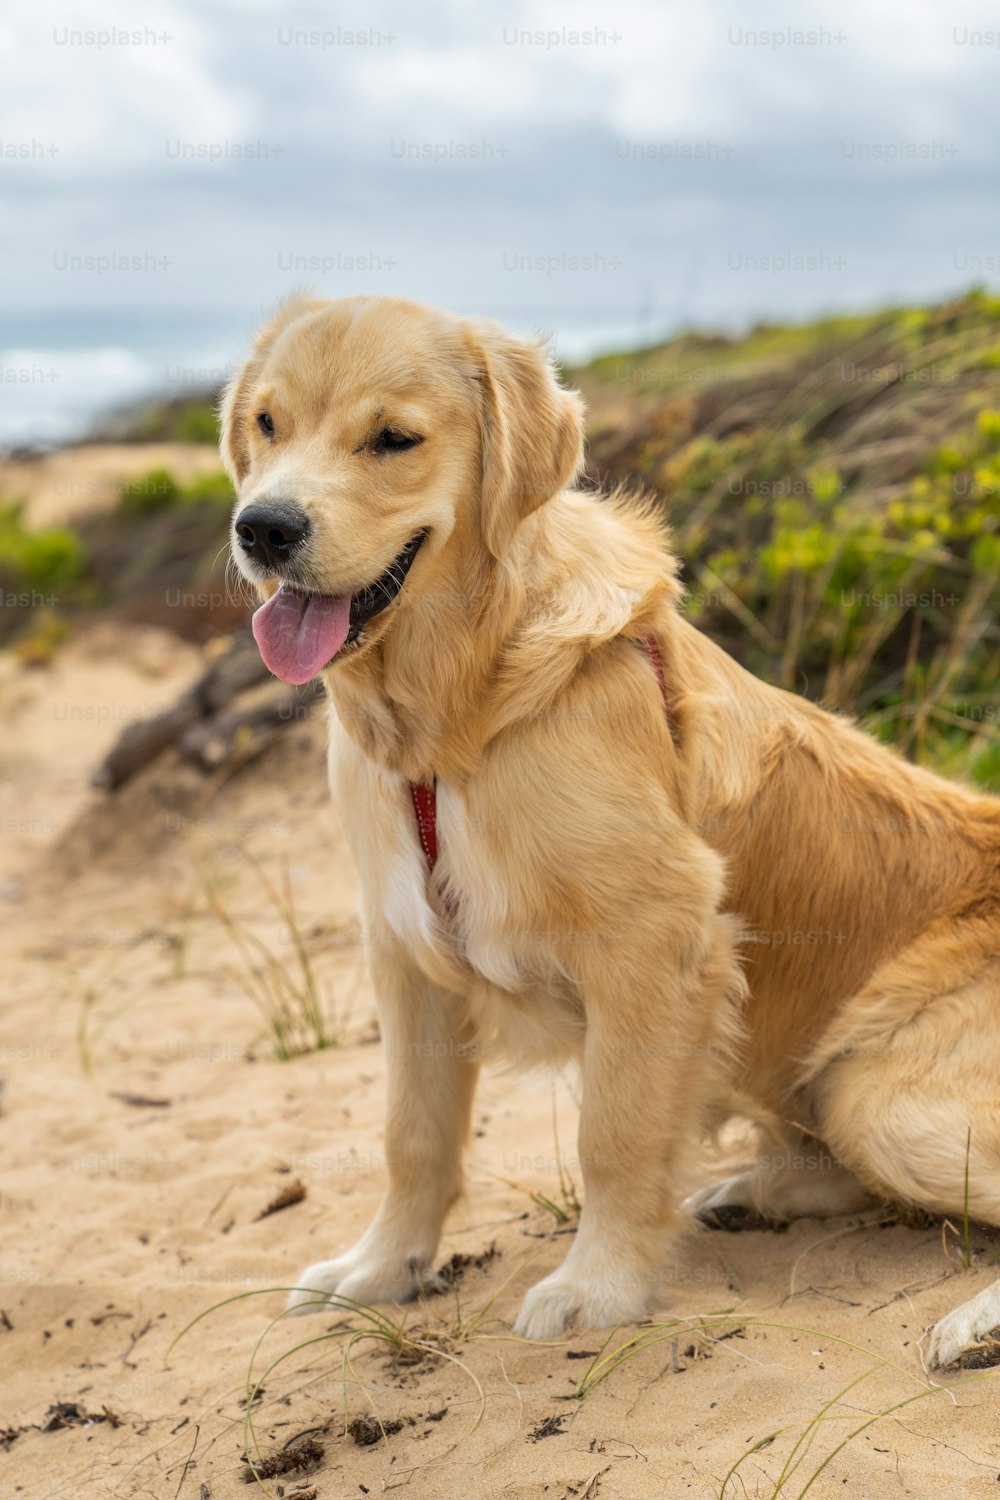 a golden retriever sitting on a sandy beach